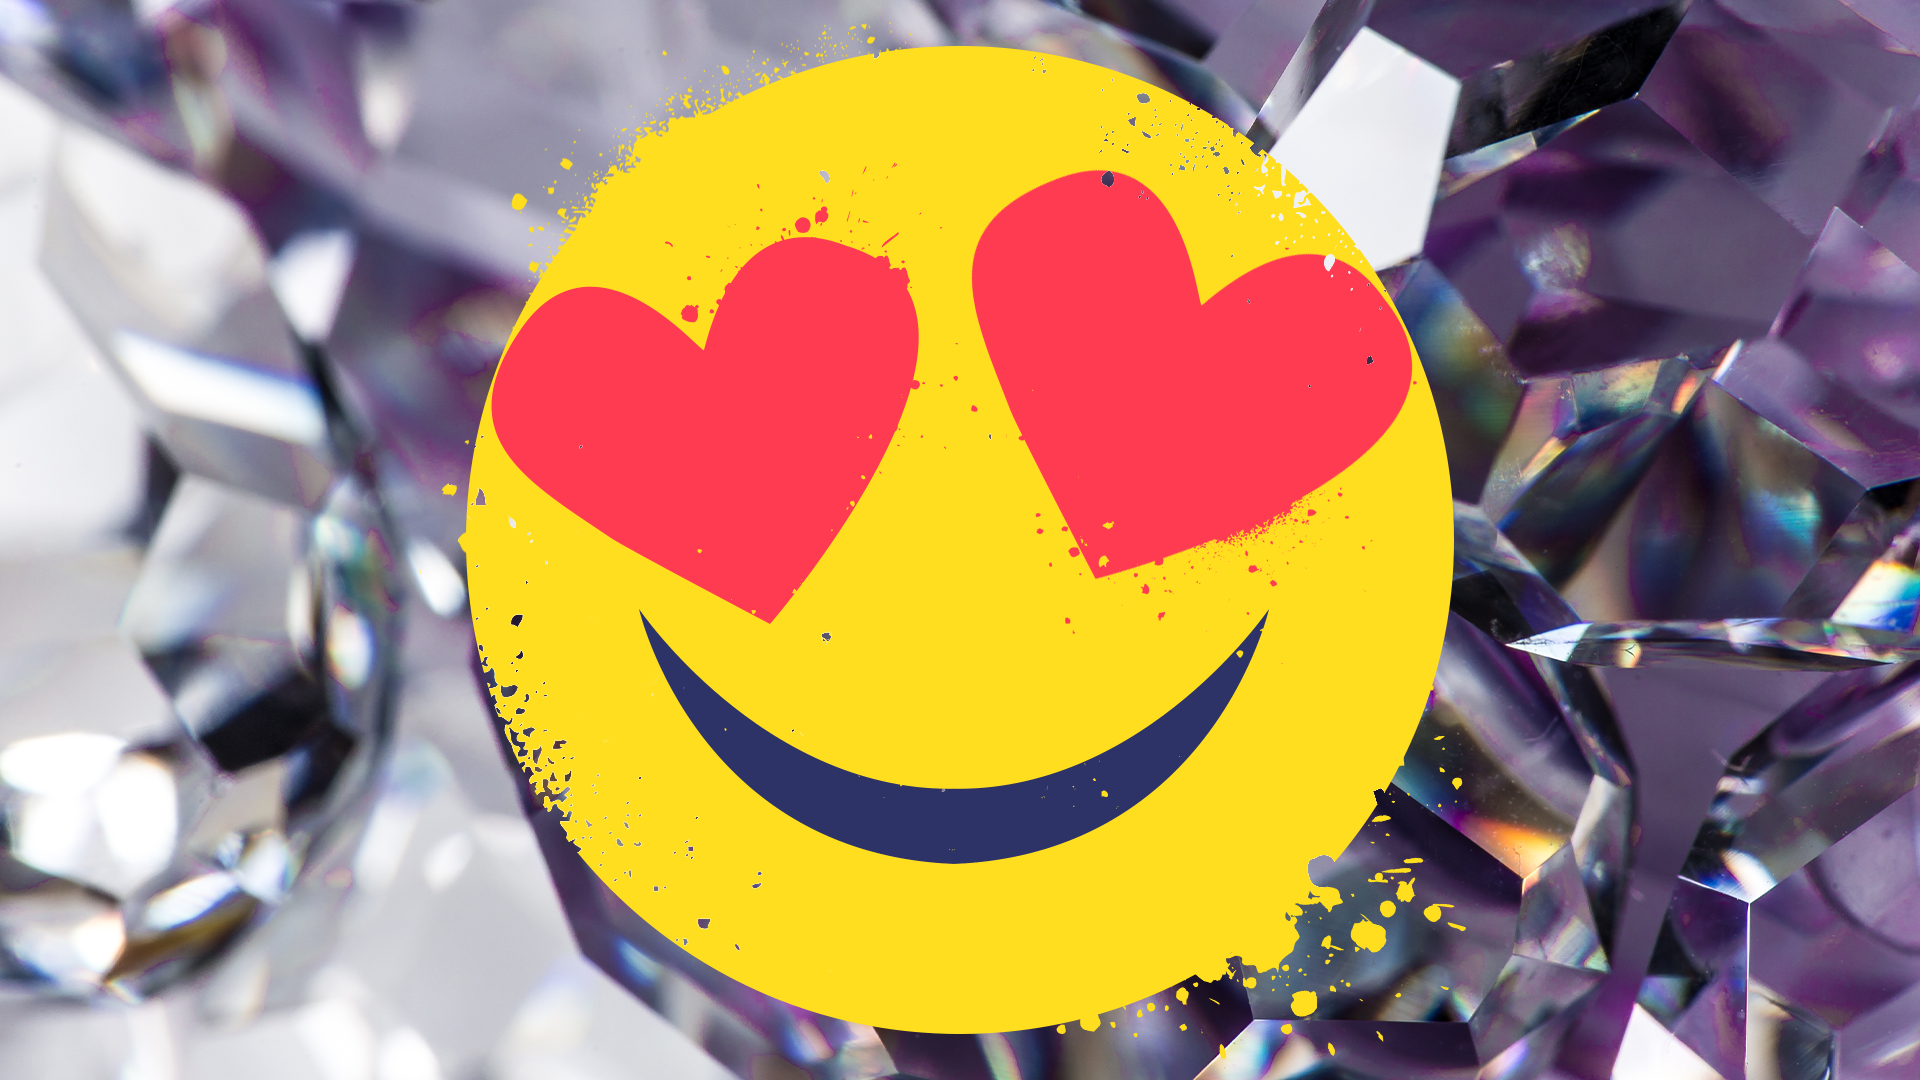 Diamond background and heart eyed emoji